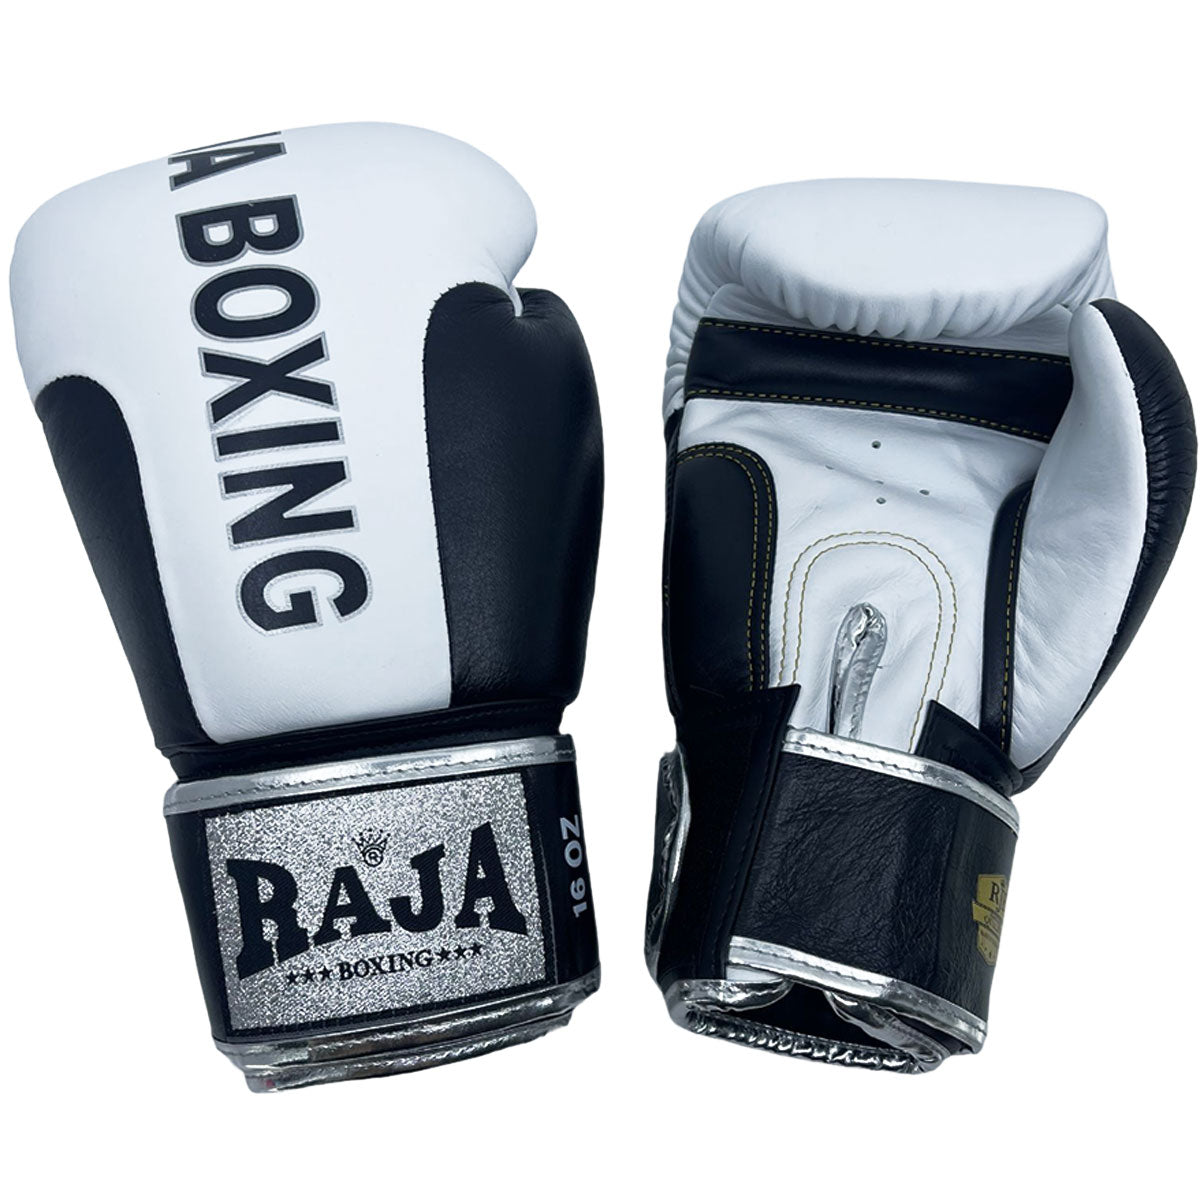 Boxing Gloves Raja RJB-P4 Black White "Original Premium Gloves" Muay Thai